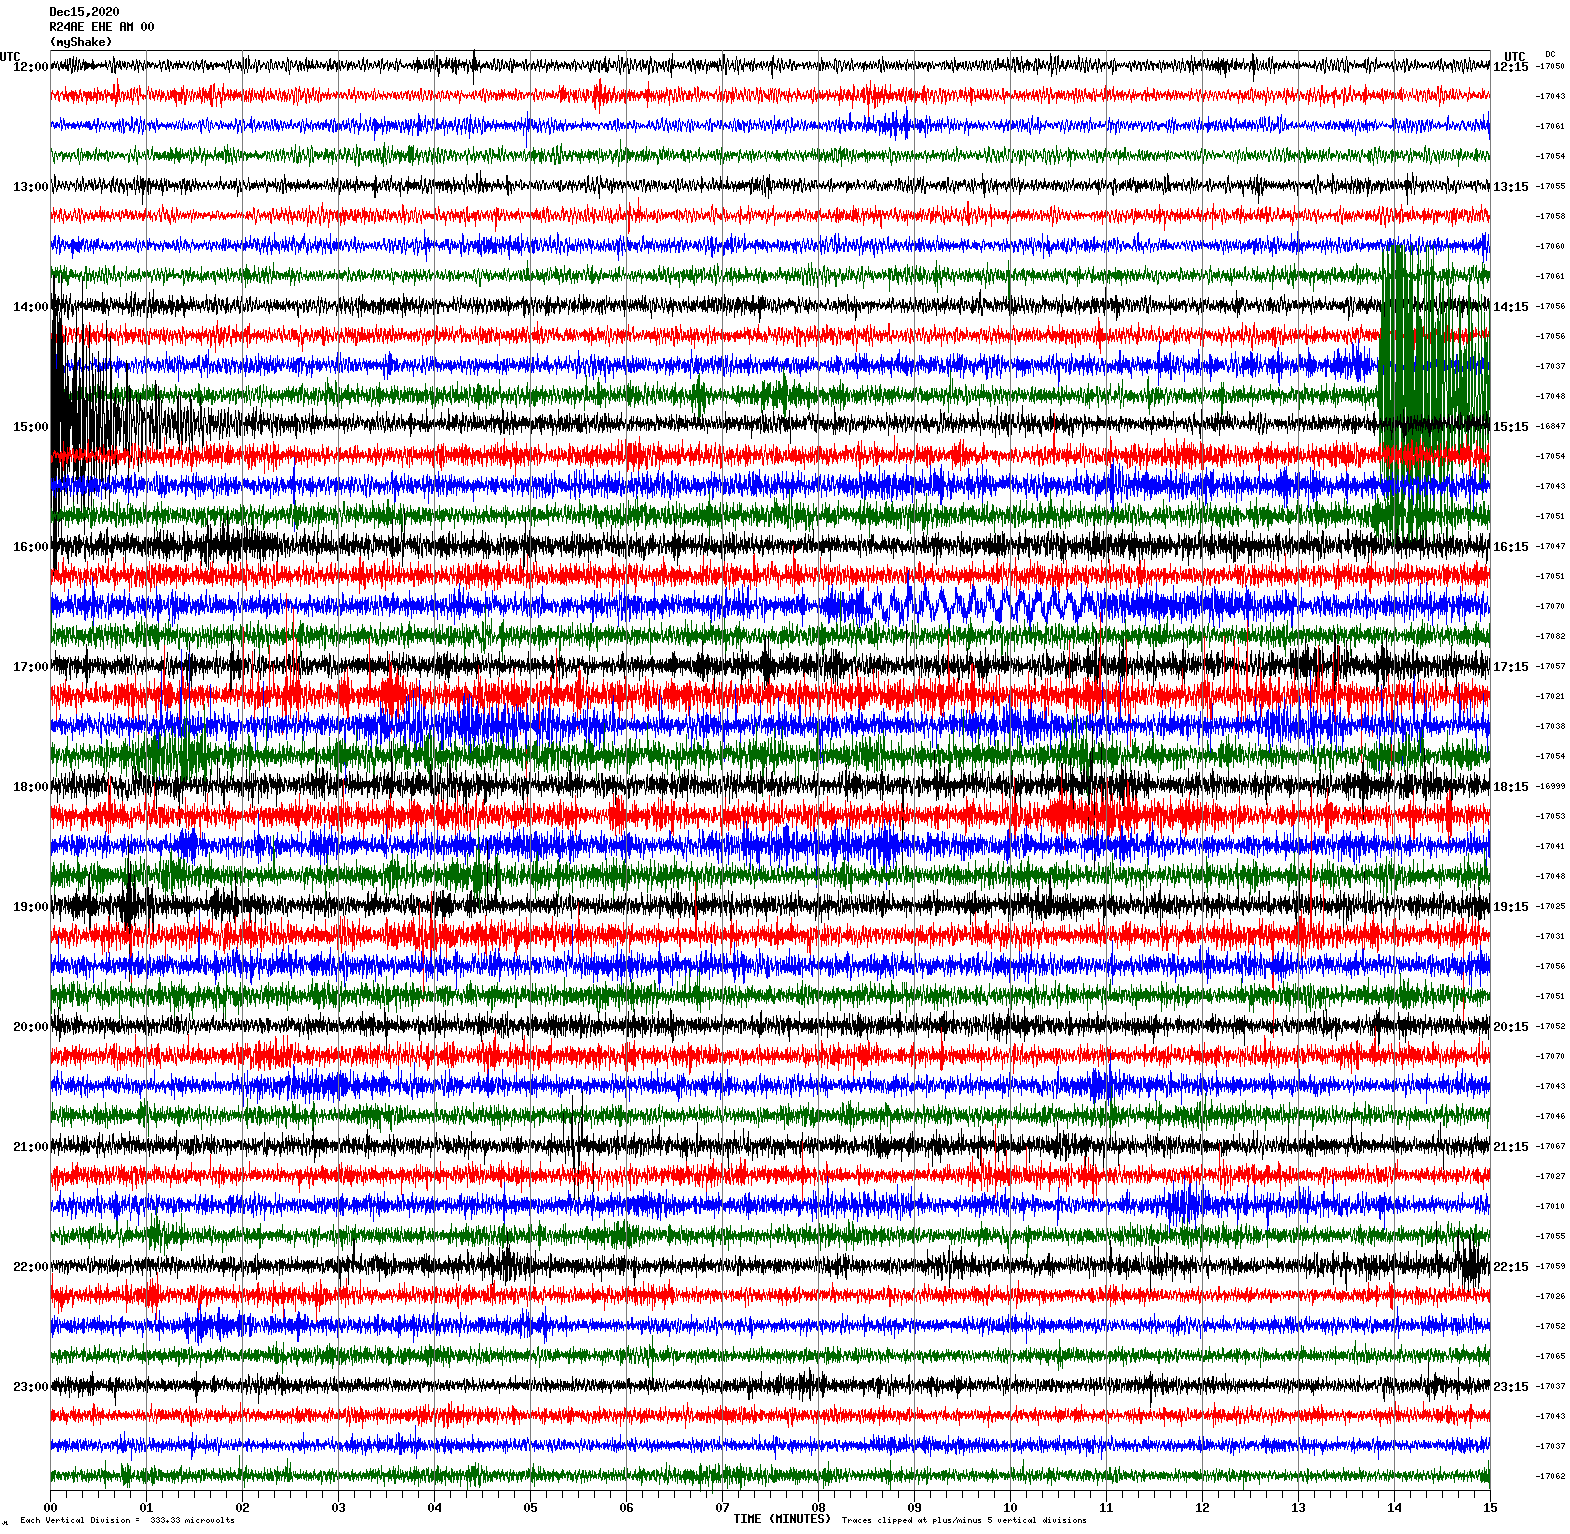 /seismic-data/R24AE/R24AE_EHE_AM_00.2020121512.gif